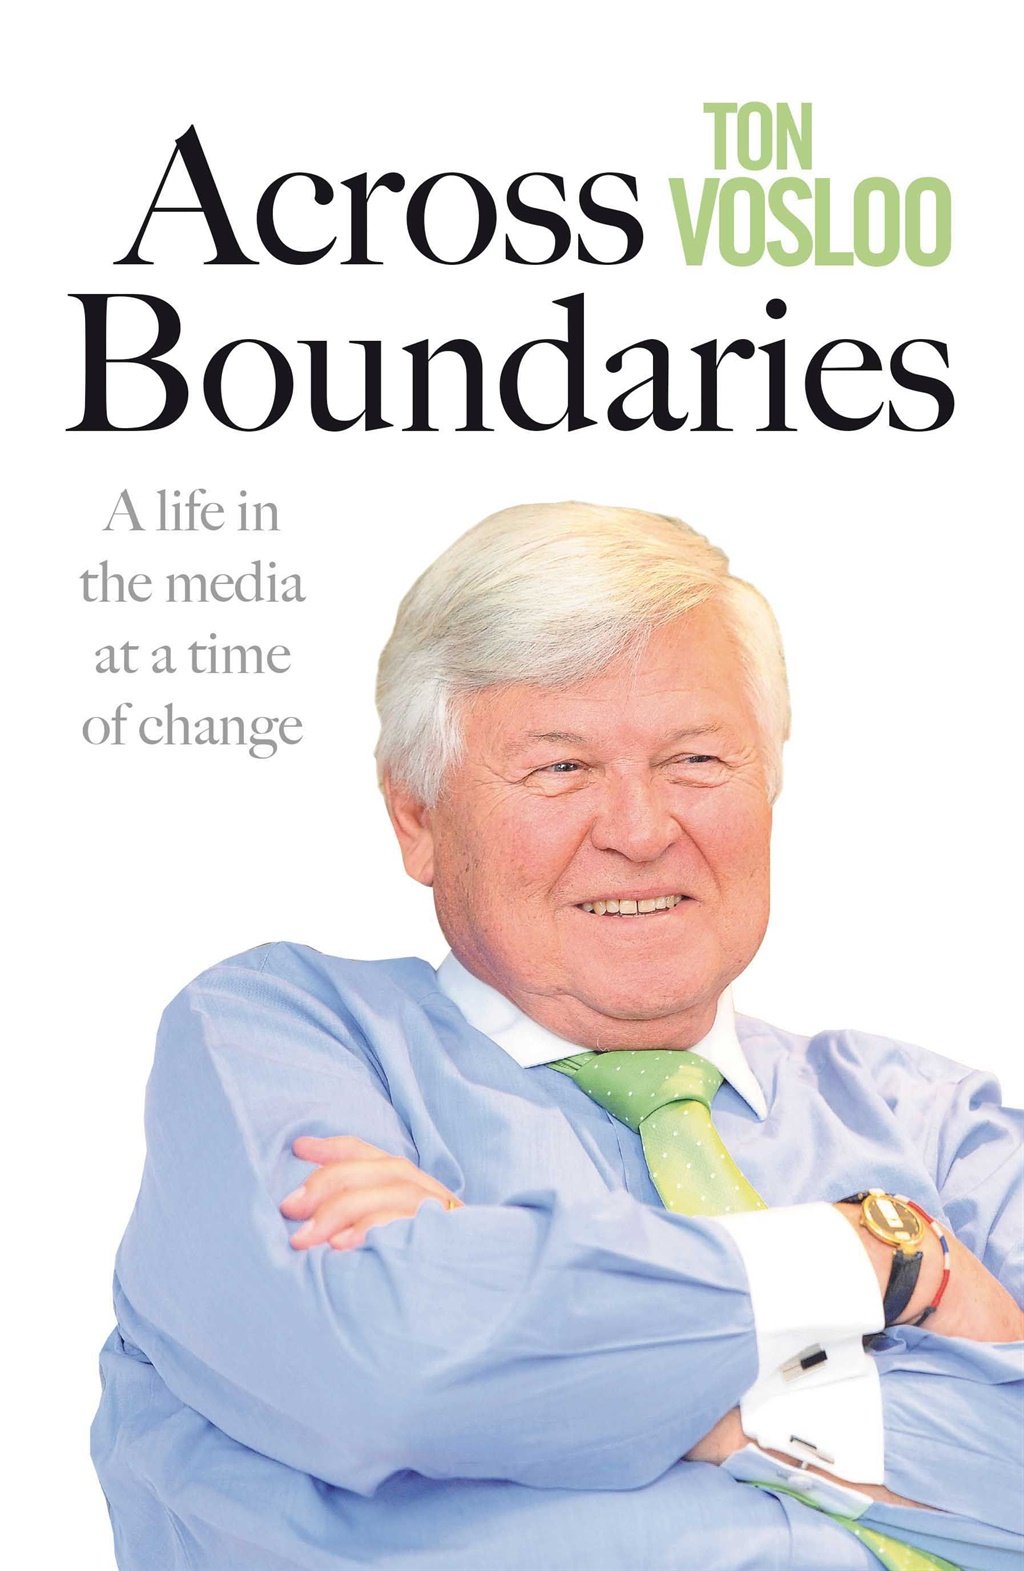 Across Boundaries by Jonathan Ball Publishers.